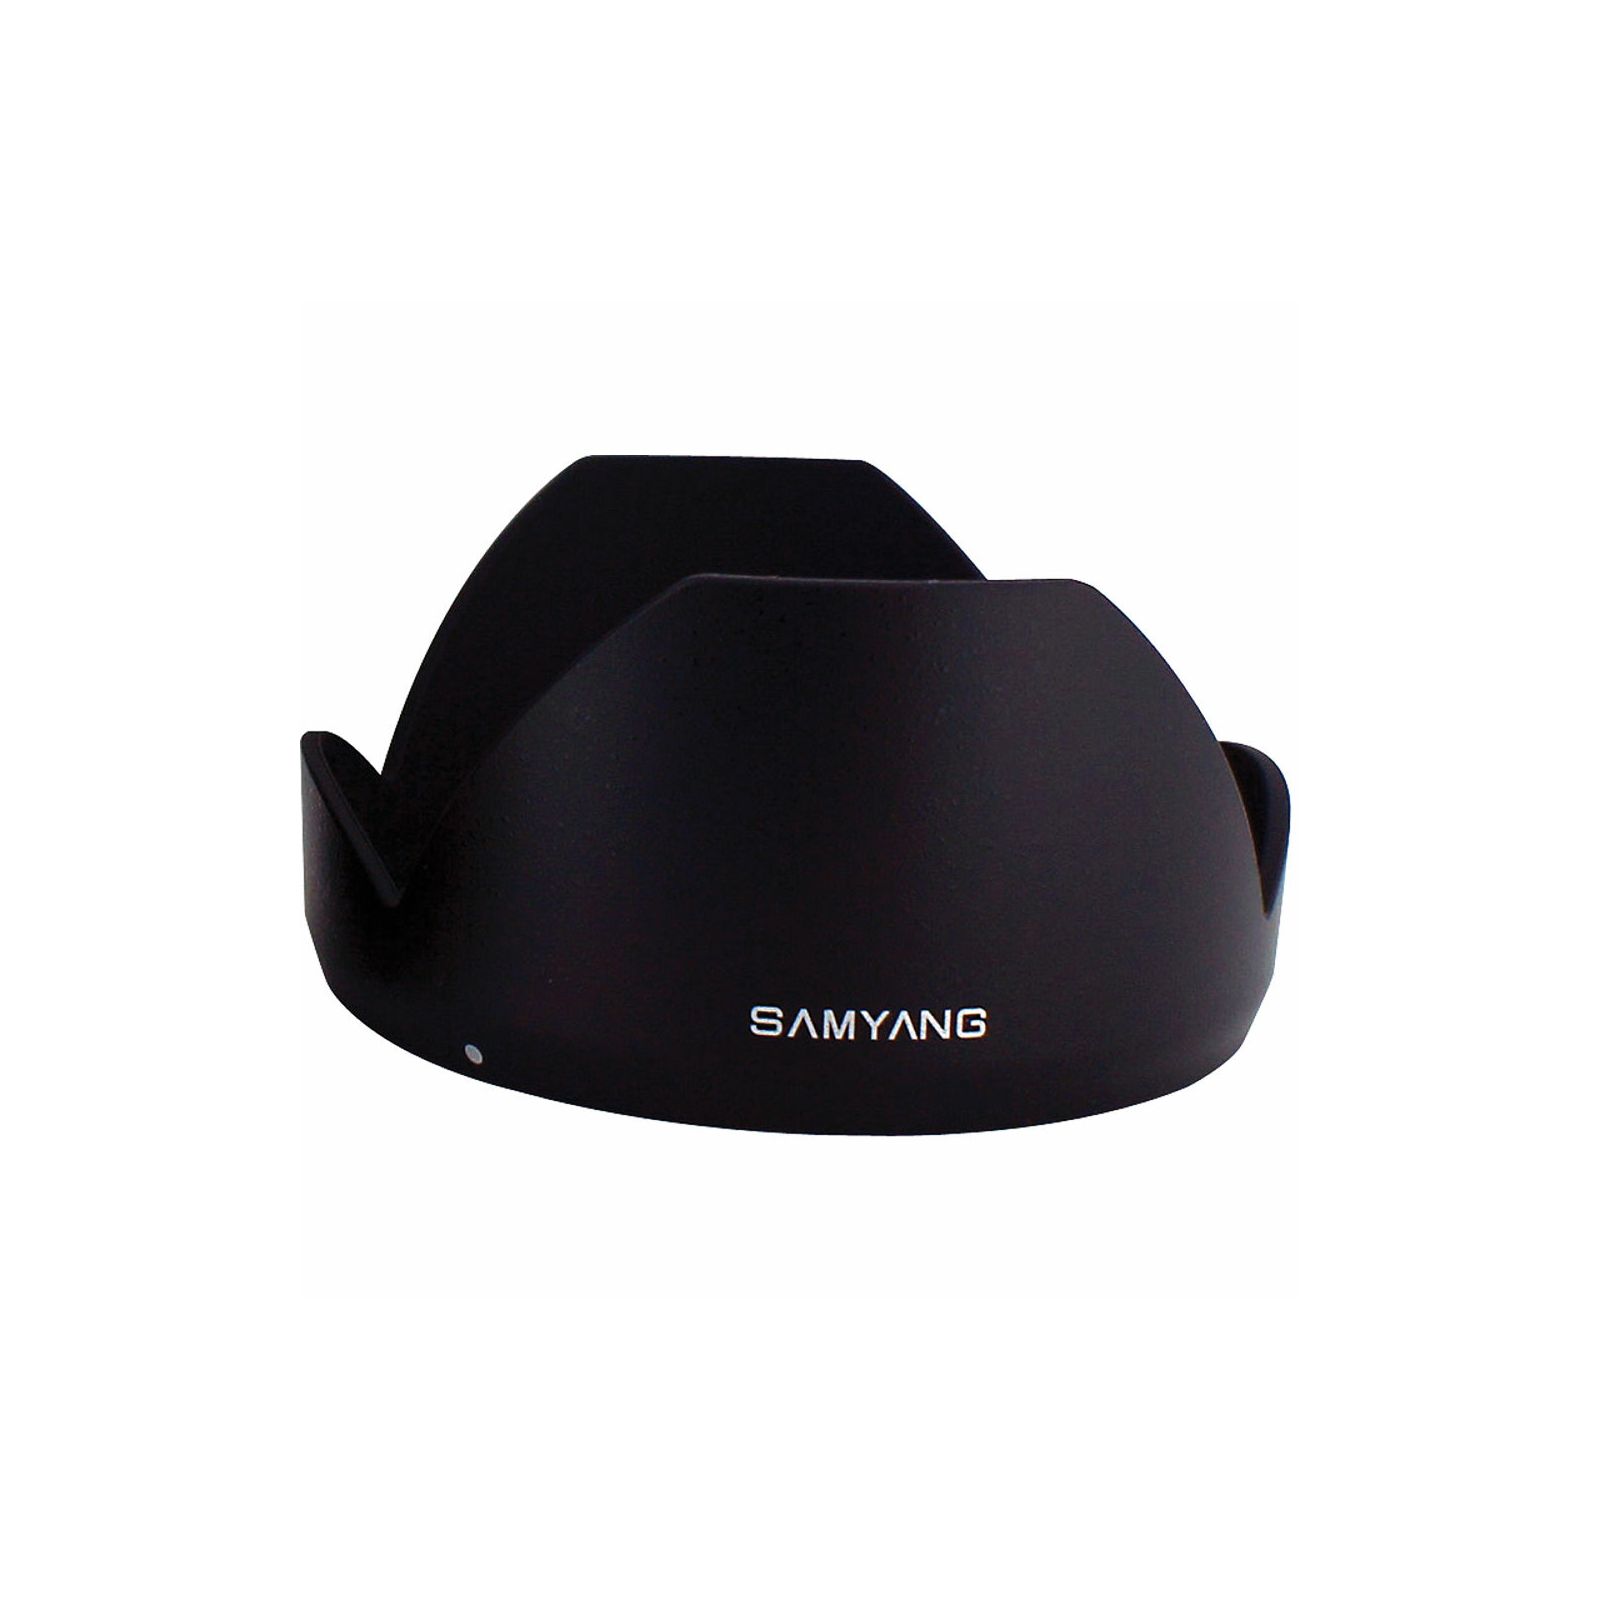 Samyang 35mm f1.4 AS UMC Sony A - Mount